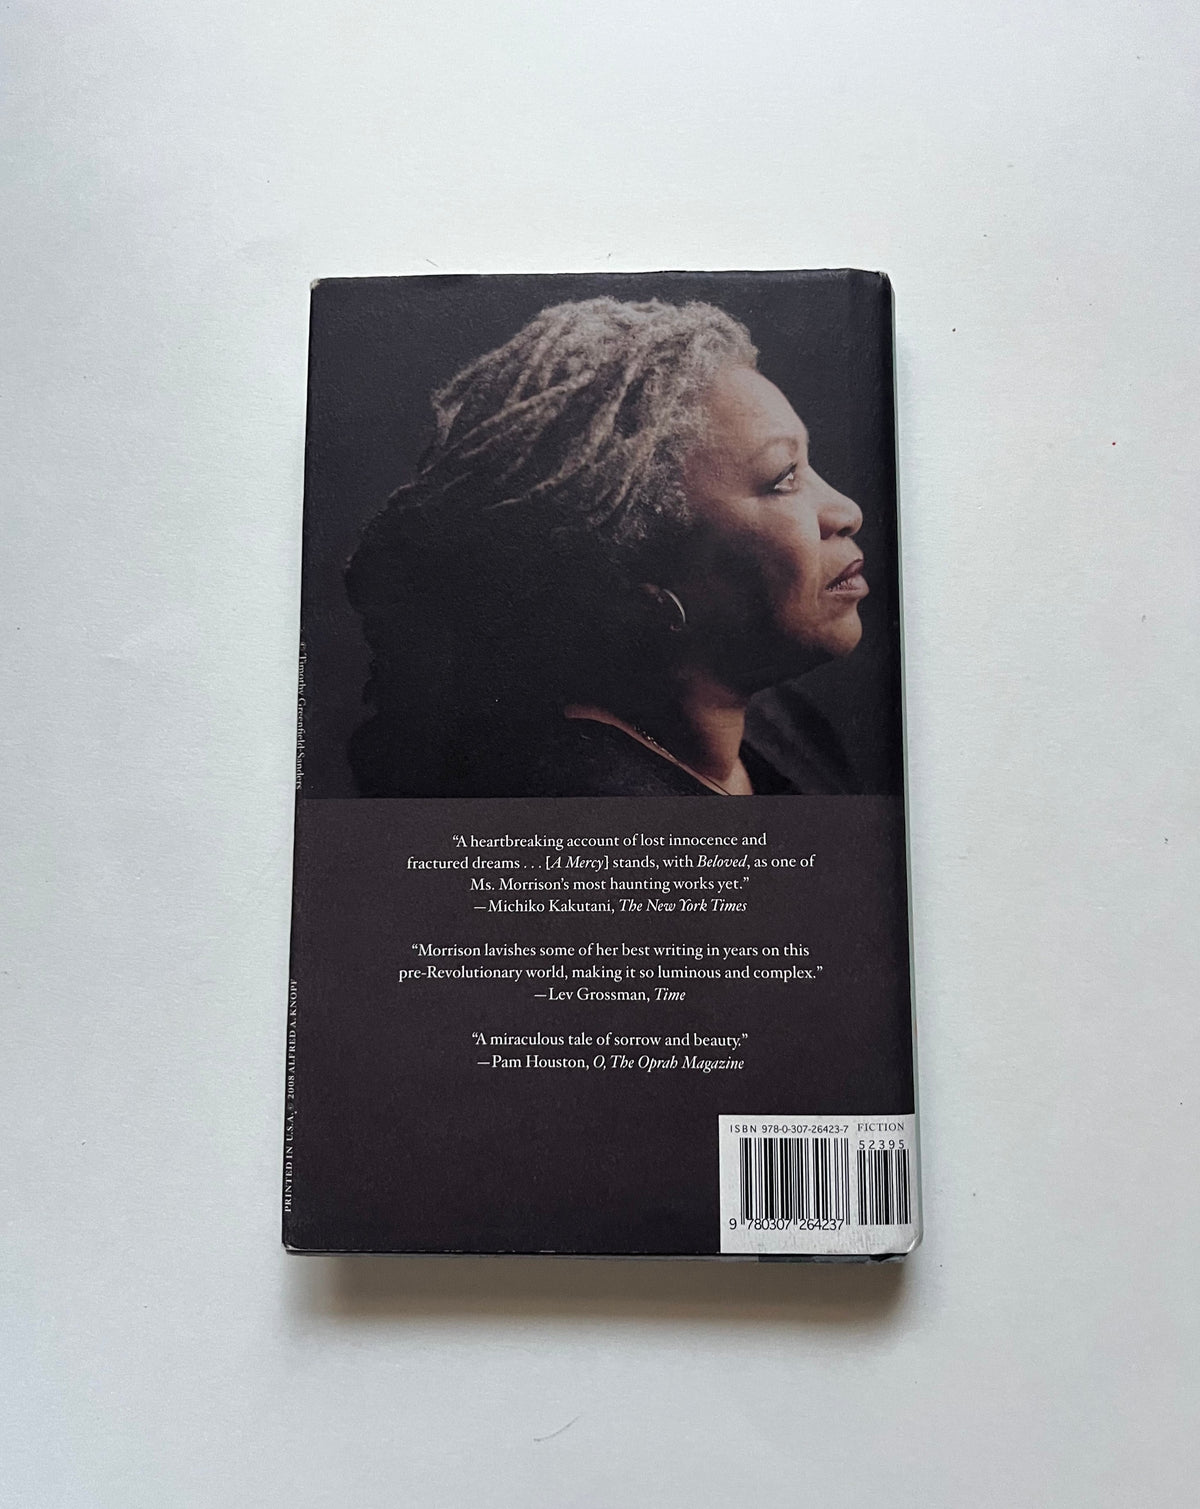 A Mercy by Toni Morrison